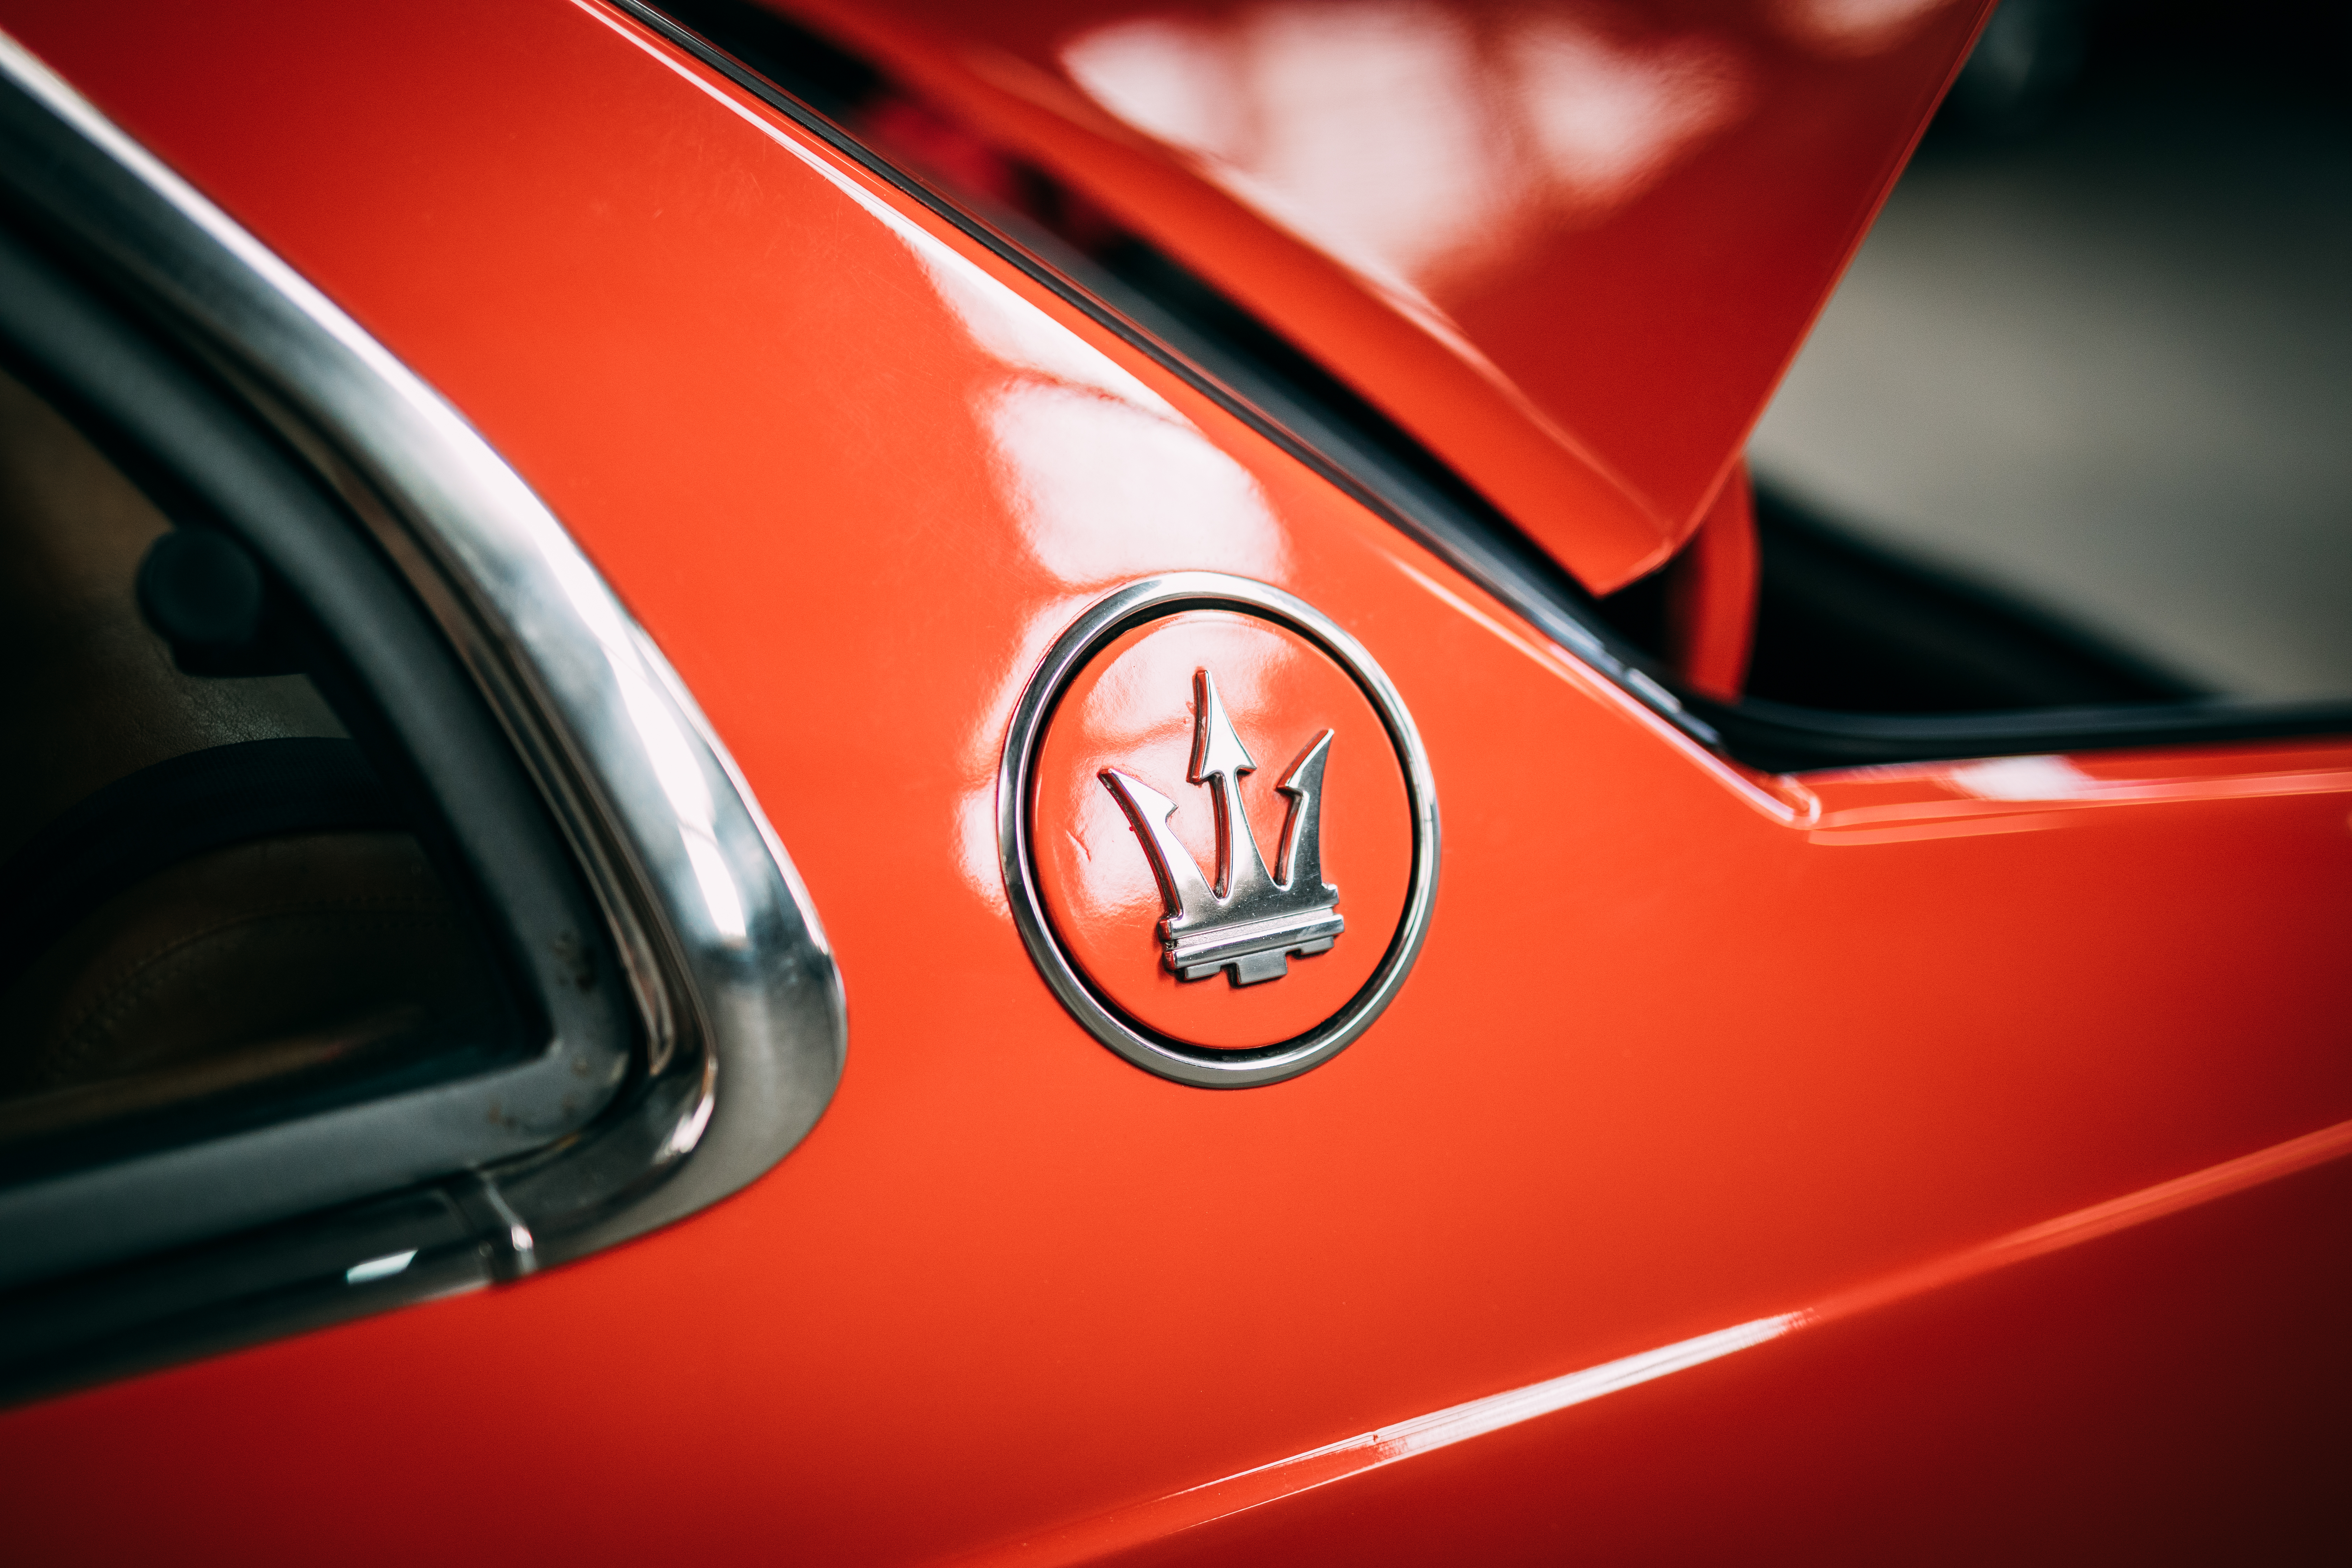 Maserati Biturbo Revival – A True Love Story